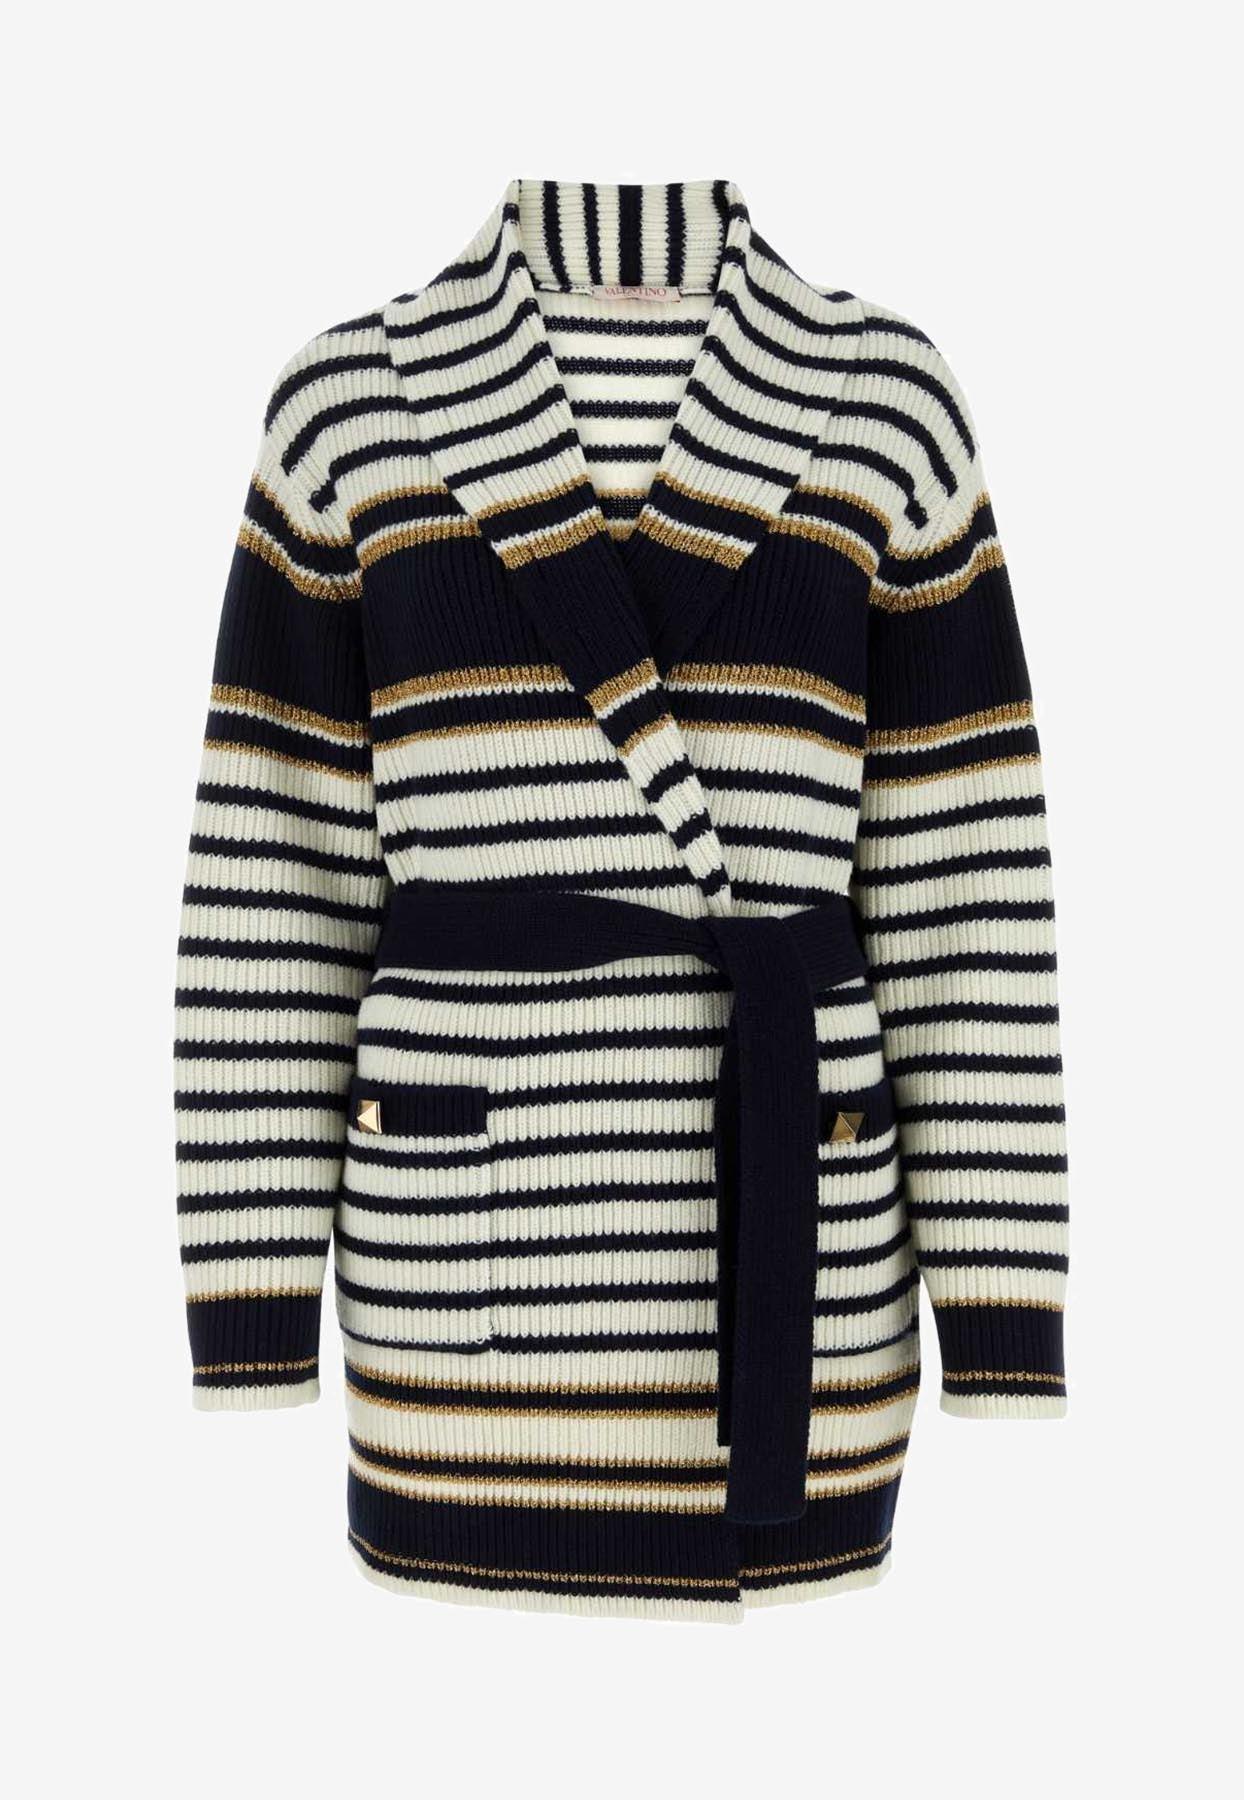 Geometric cashmere & wool knit cardigan - Valentino - Women